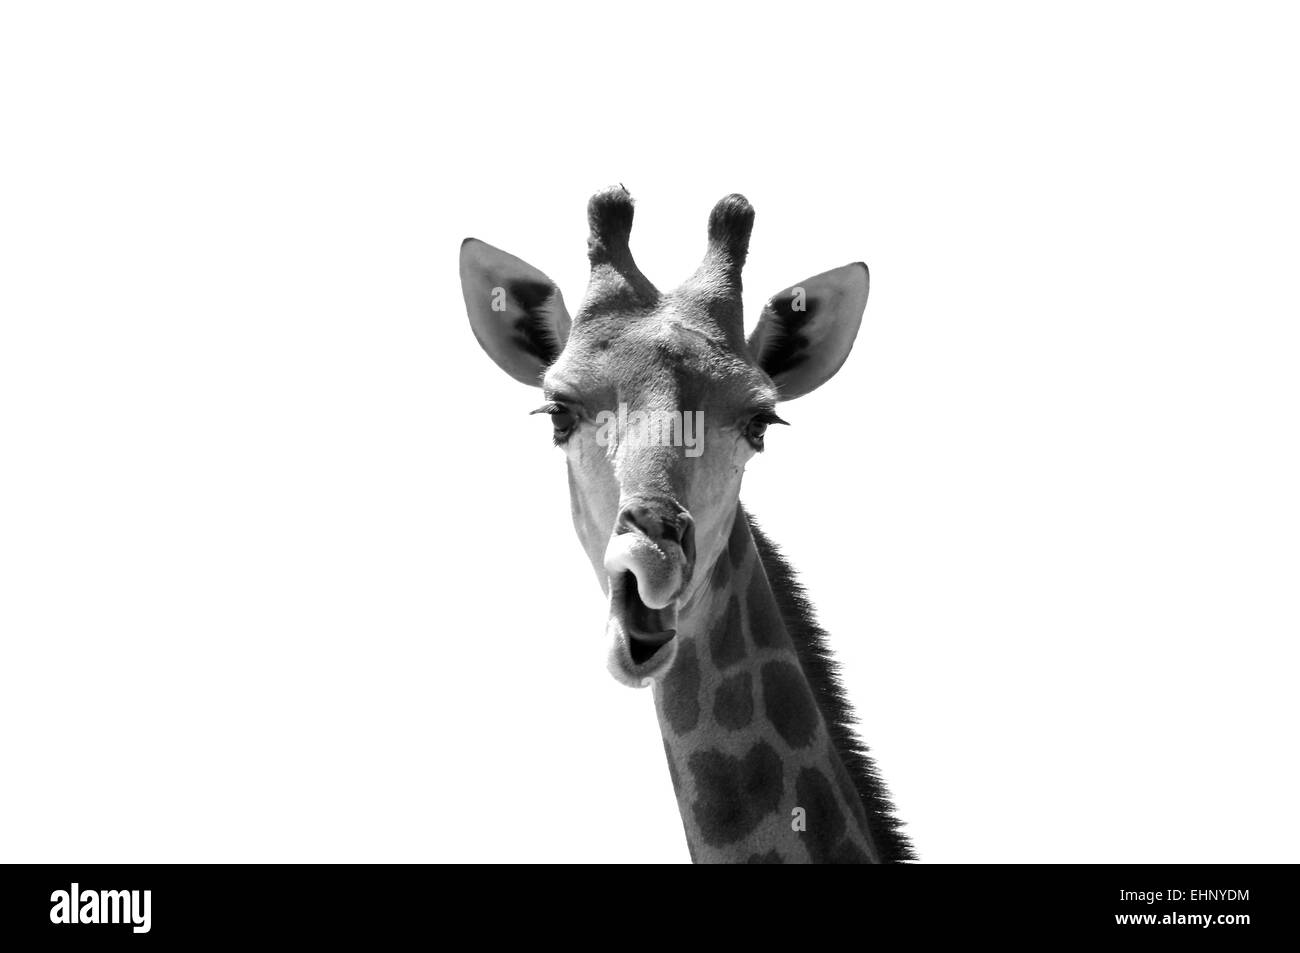 Black and white photograph of Giraffe's head taken at the Nofa African Resort in Saudi Arabia Stock Photo